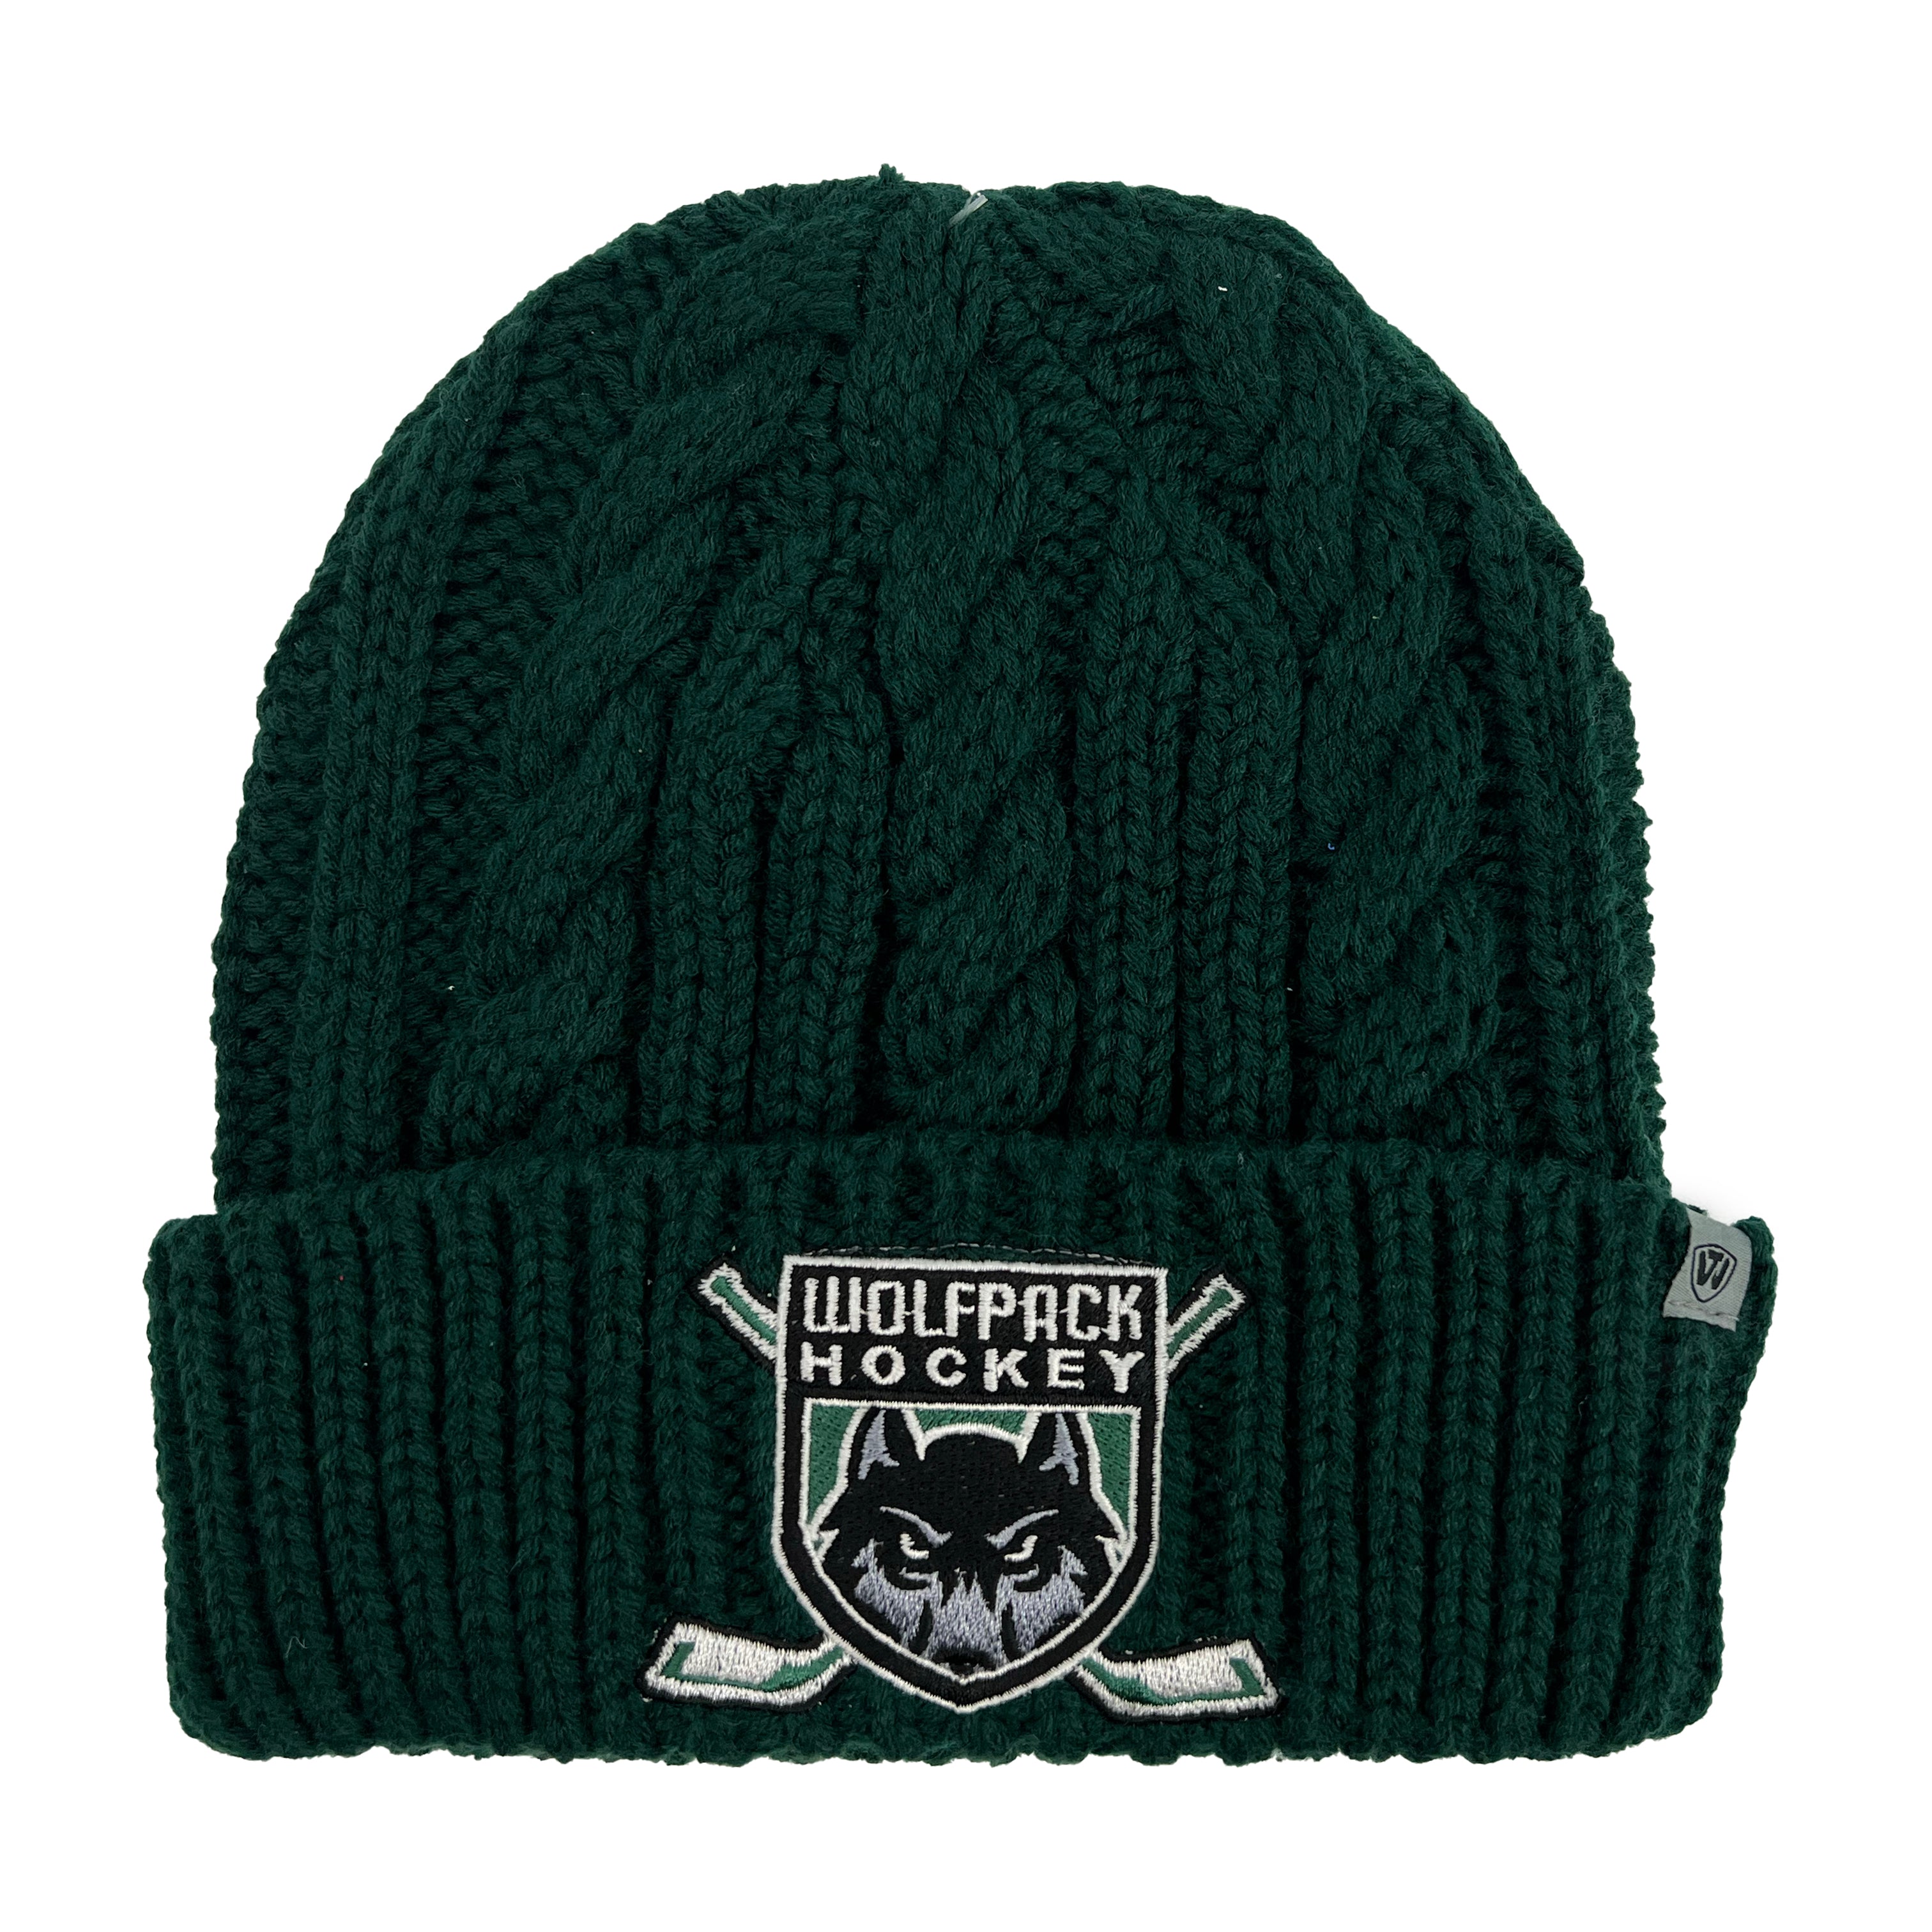 Wolfpack Hockey Top of the World Knit Hat-Hats-Advanced Sportswear